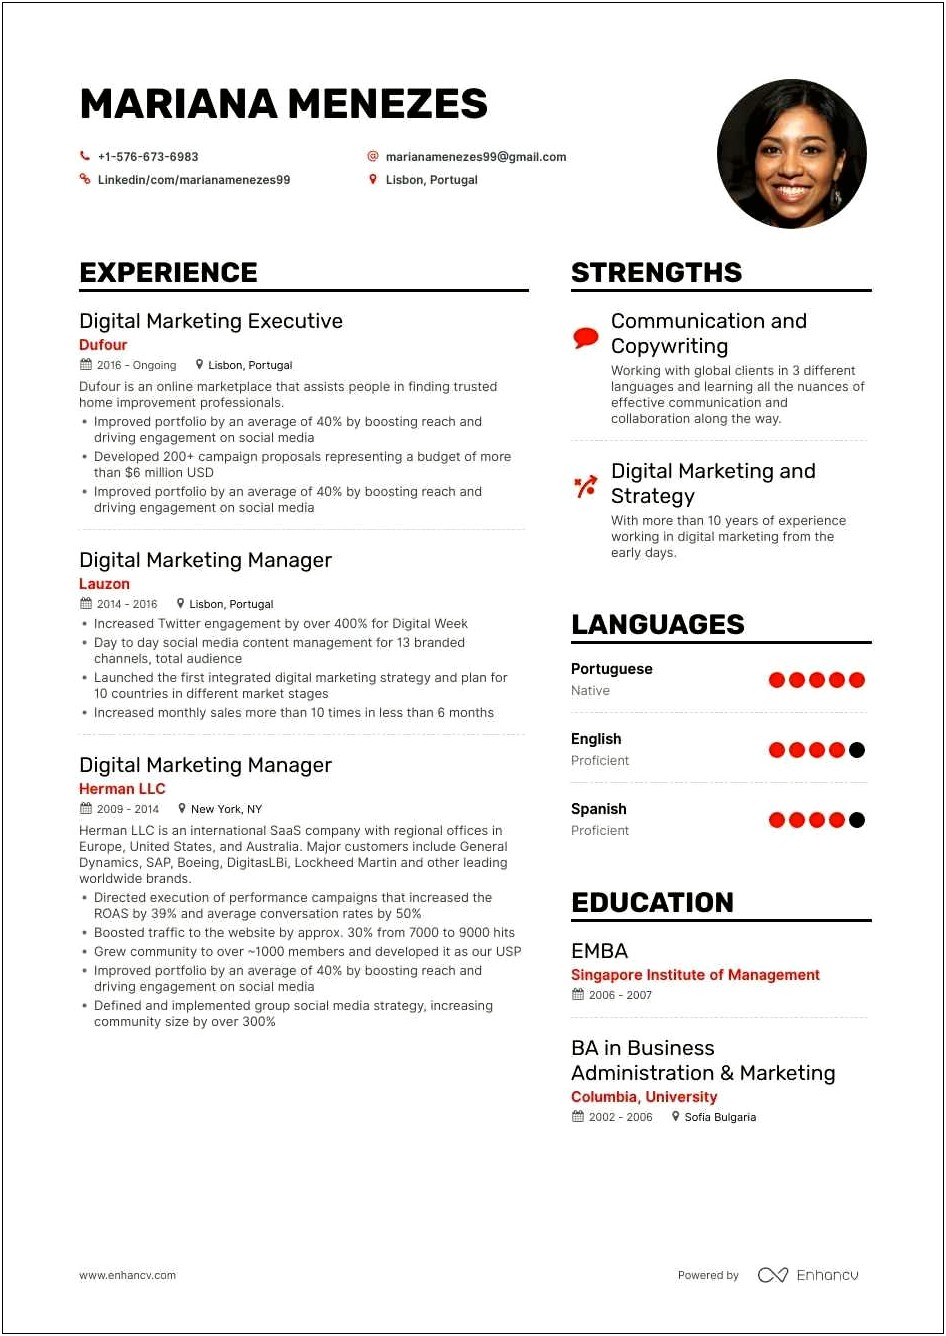 Key Skills For Marketing Executive Resume